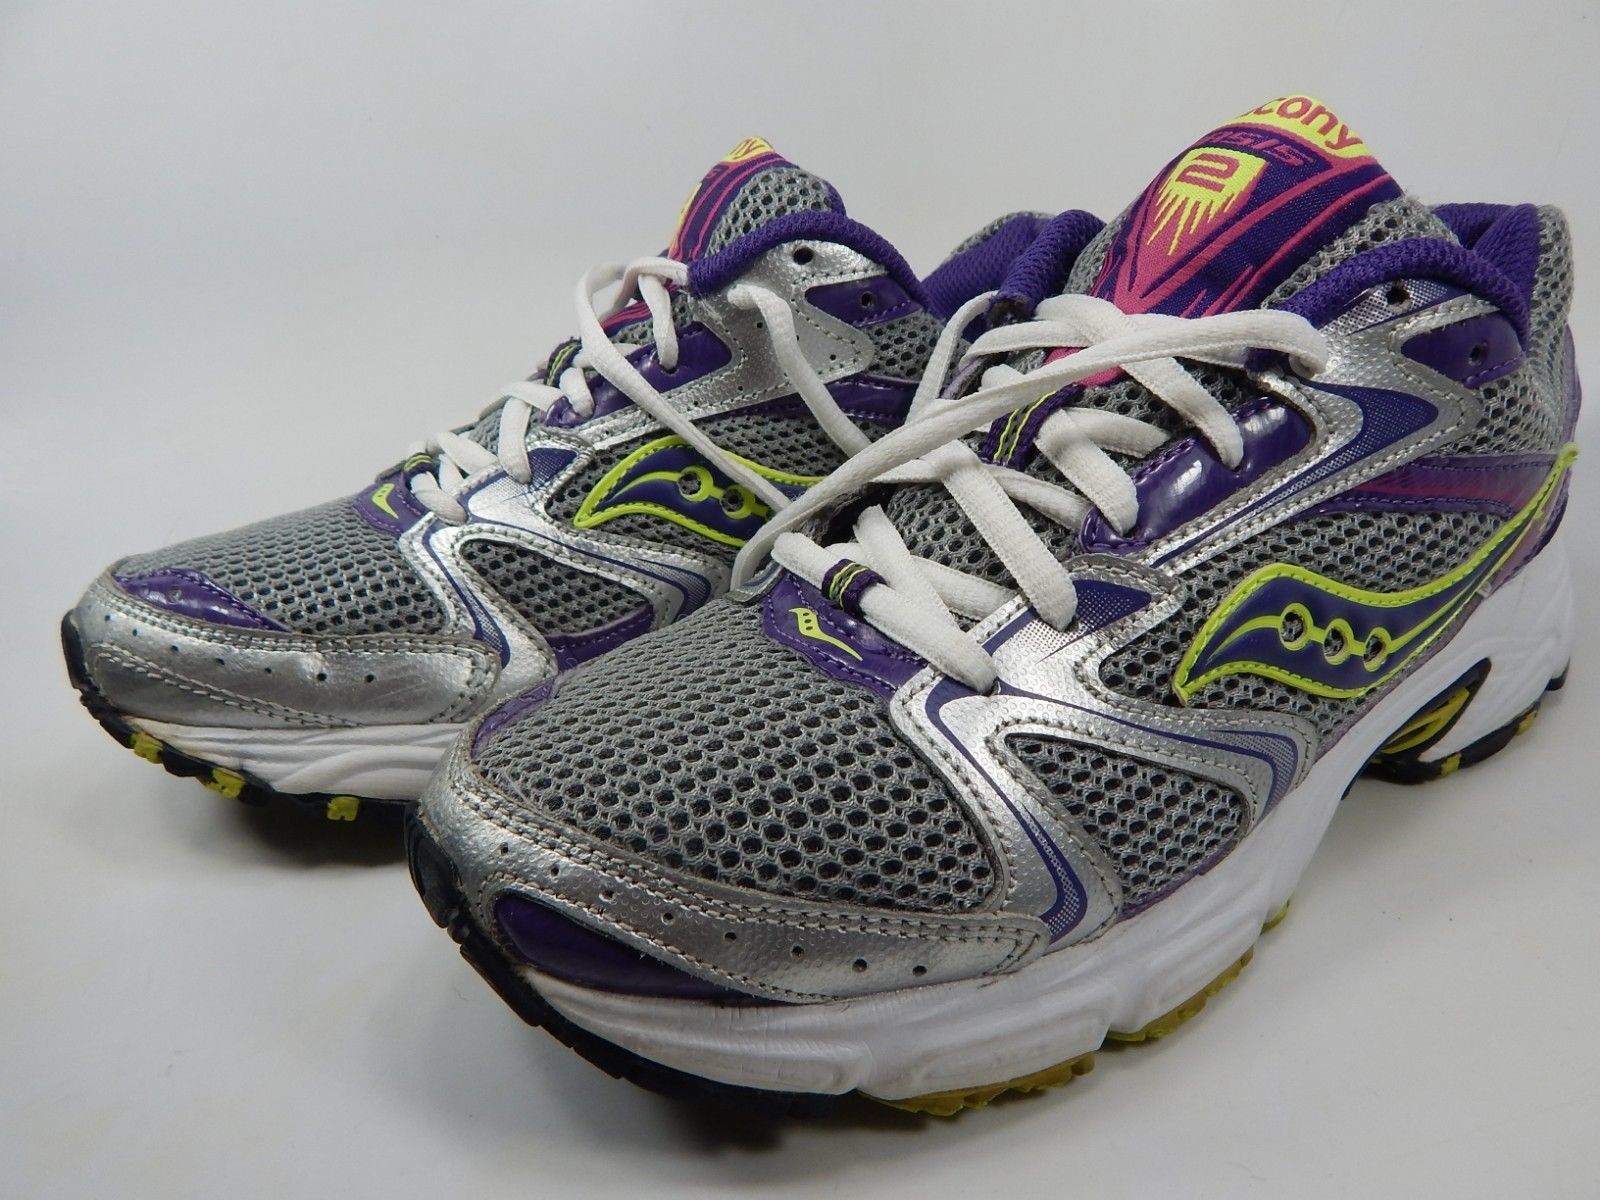 Saucony Oasis 2 Size US 8.5 M (B) EU 40 Women's Running Shoes Silver ...